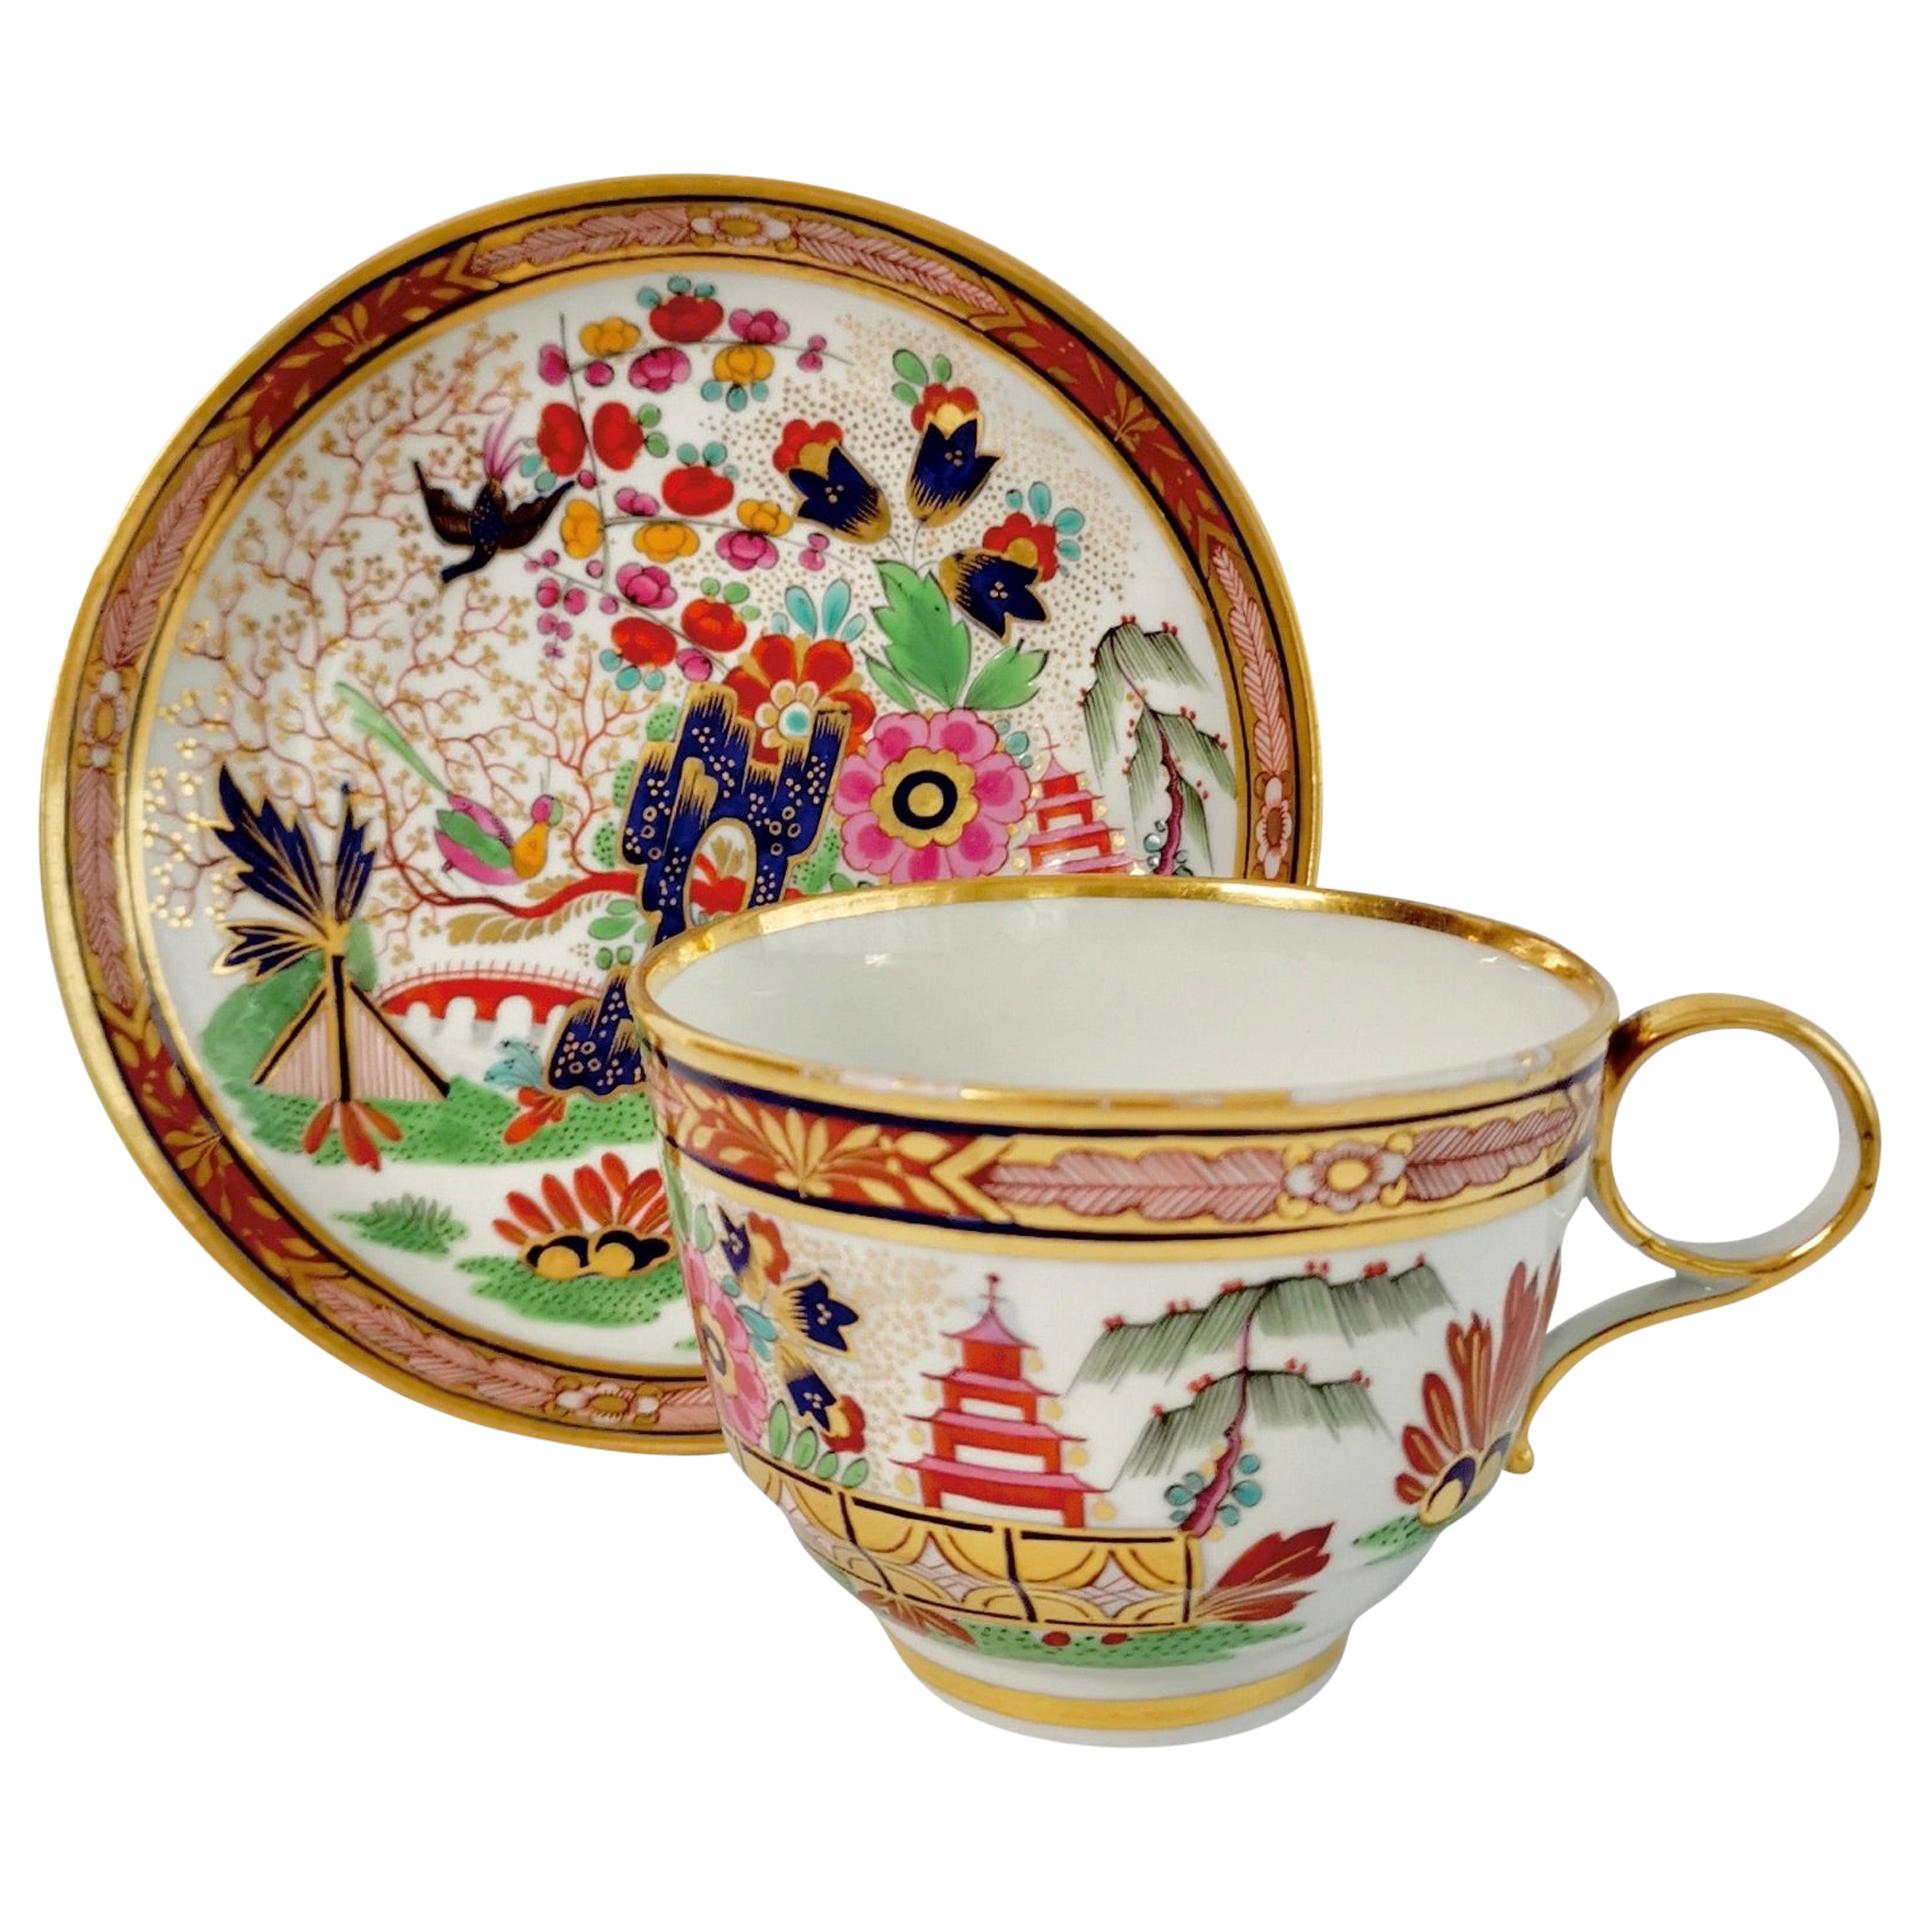 Barr Flight & Barr Porcelain Teacup, Rich Imari Pattern, Regency, circa 1811